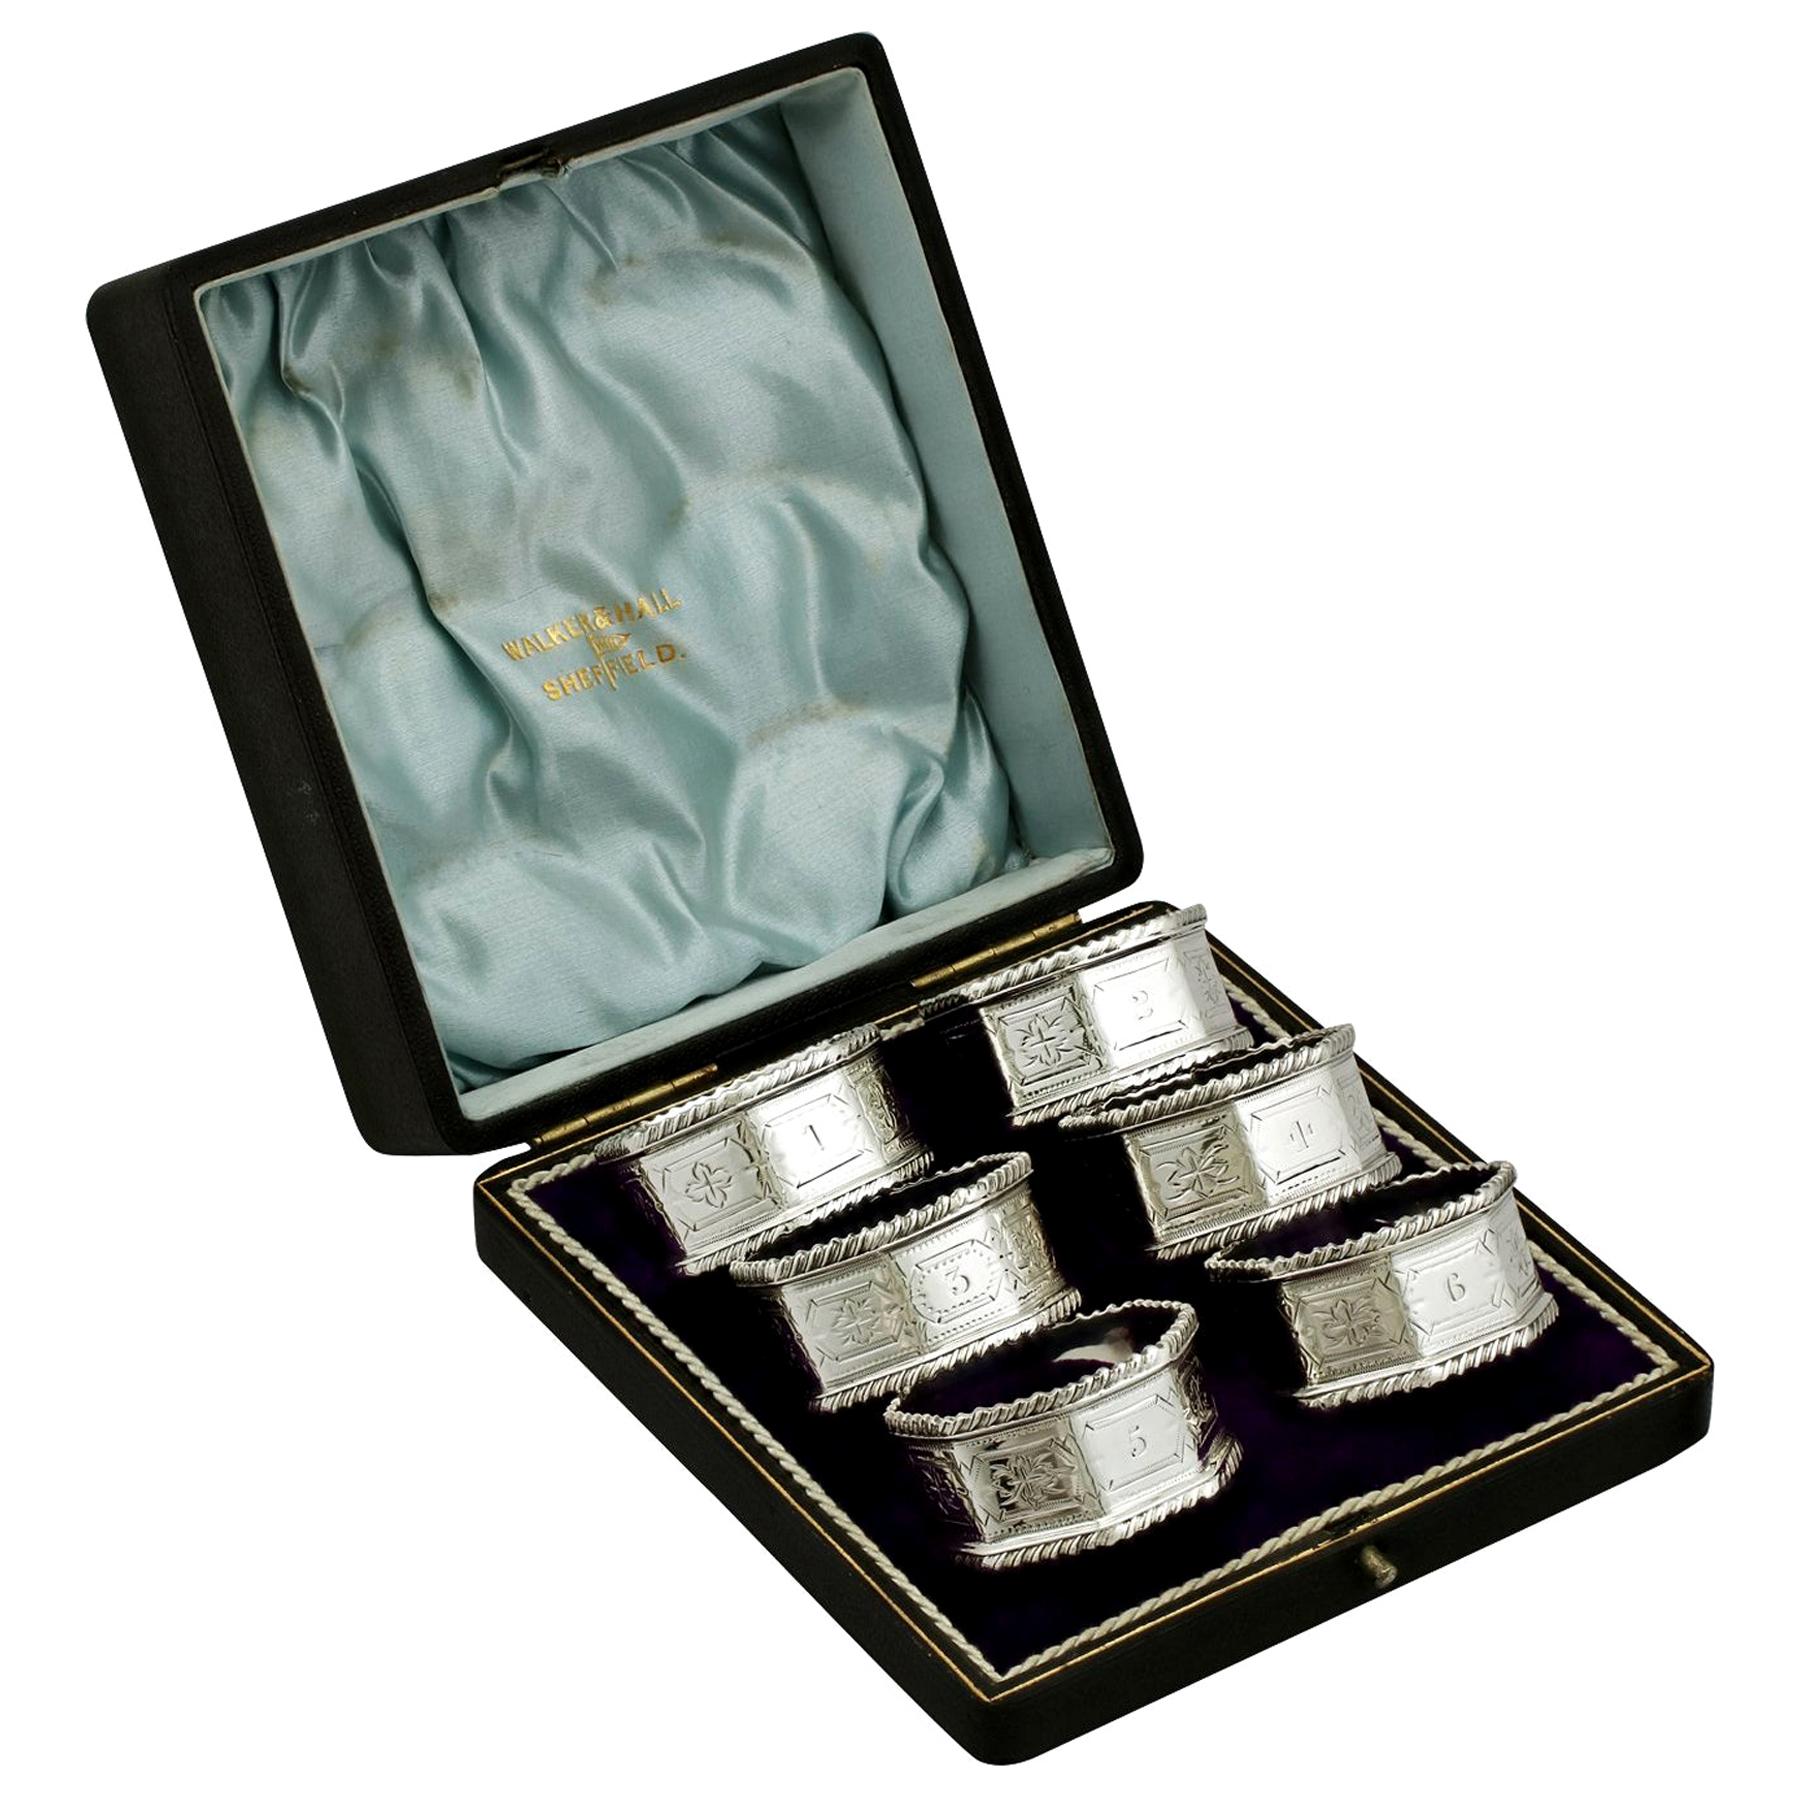 Antique Edwardian Sterling Silver Napkin Rings, 1902